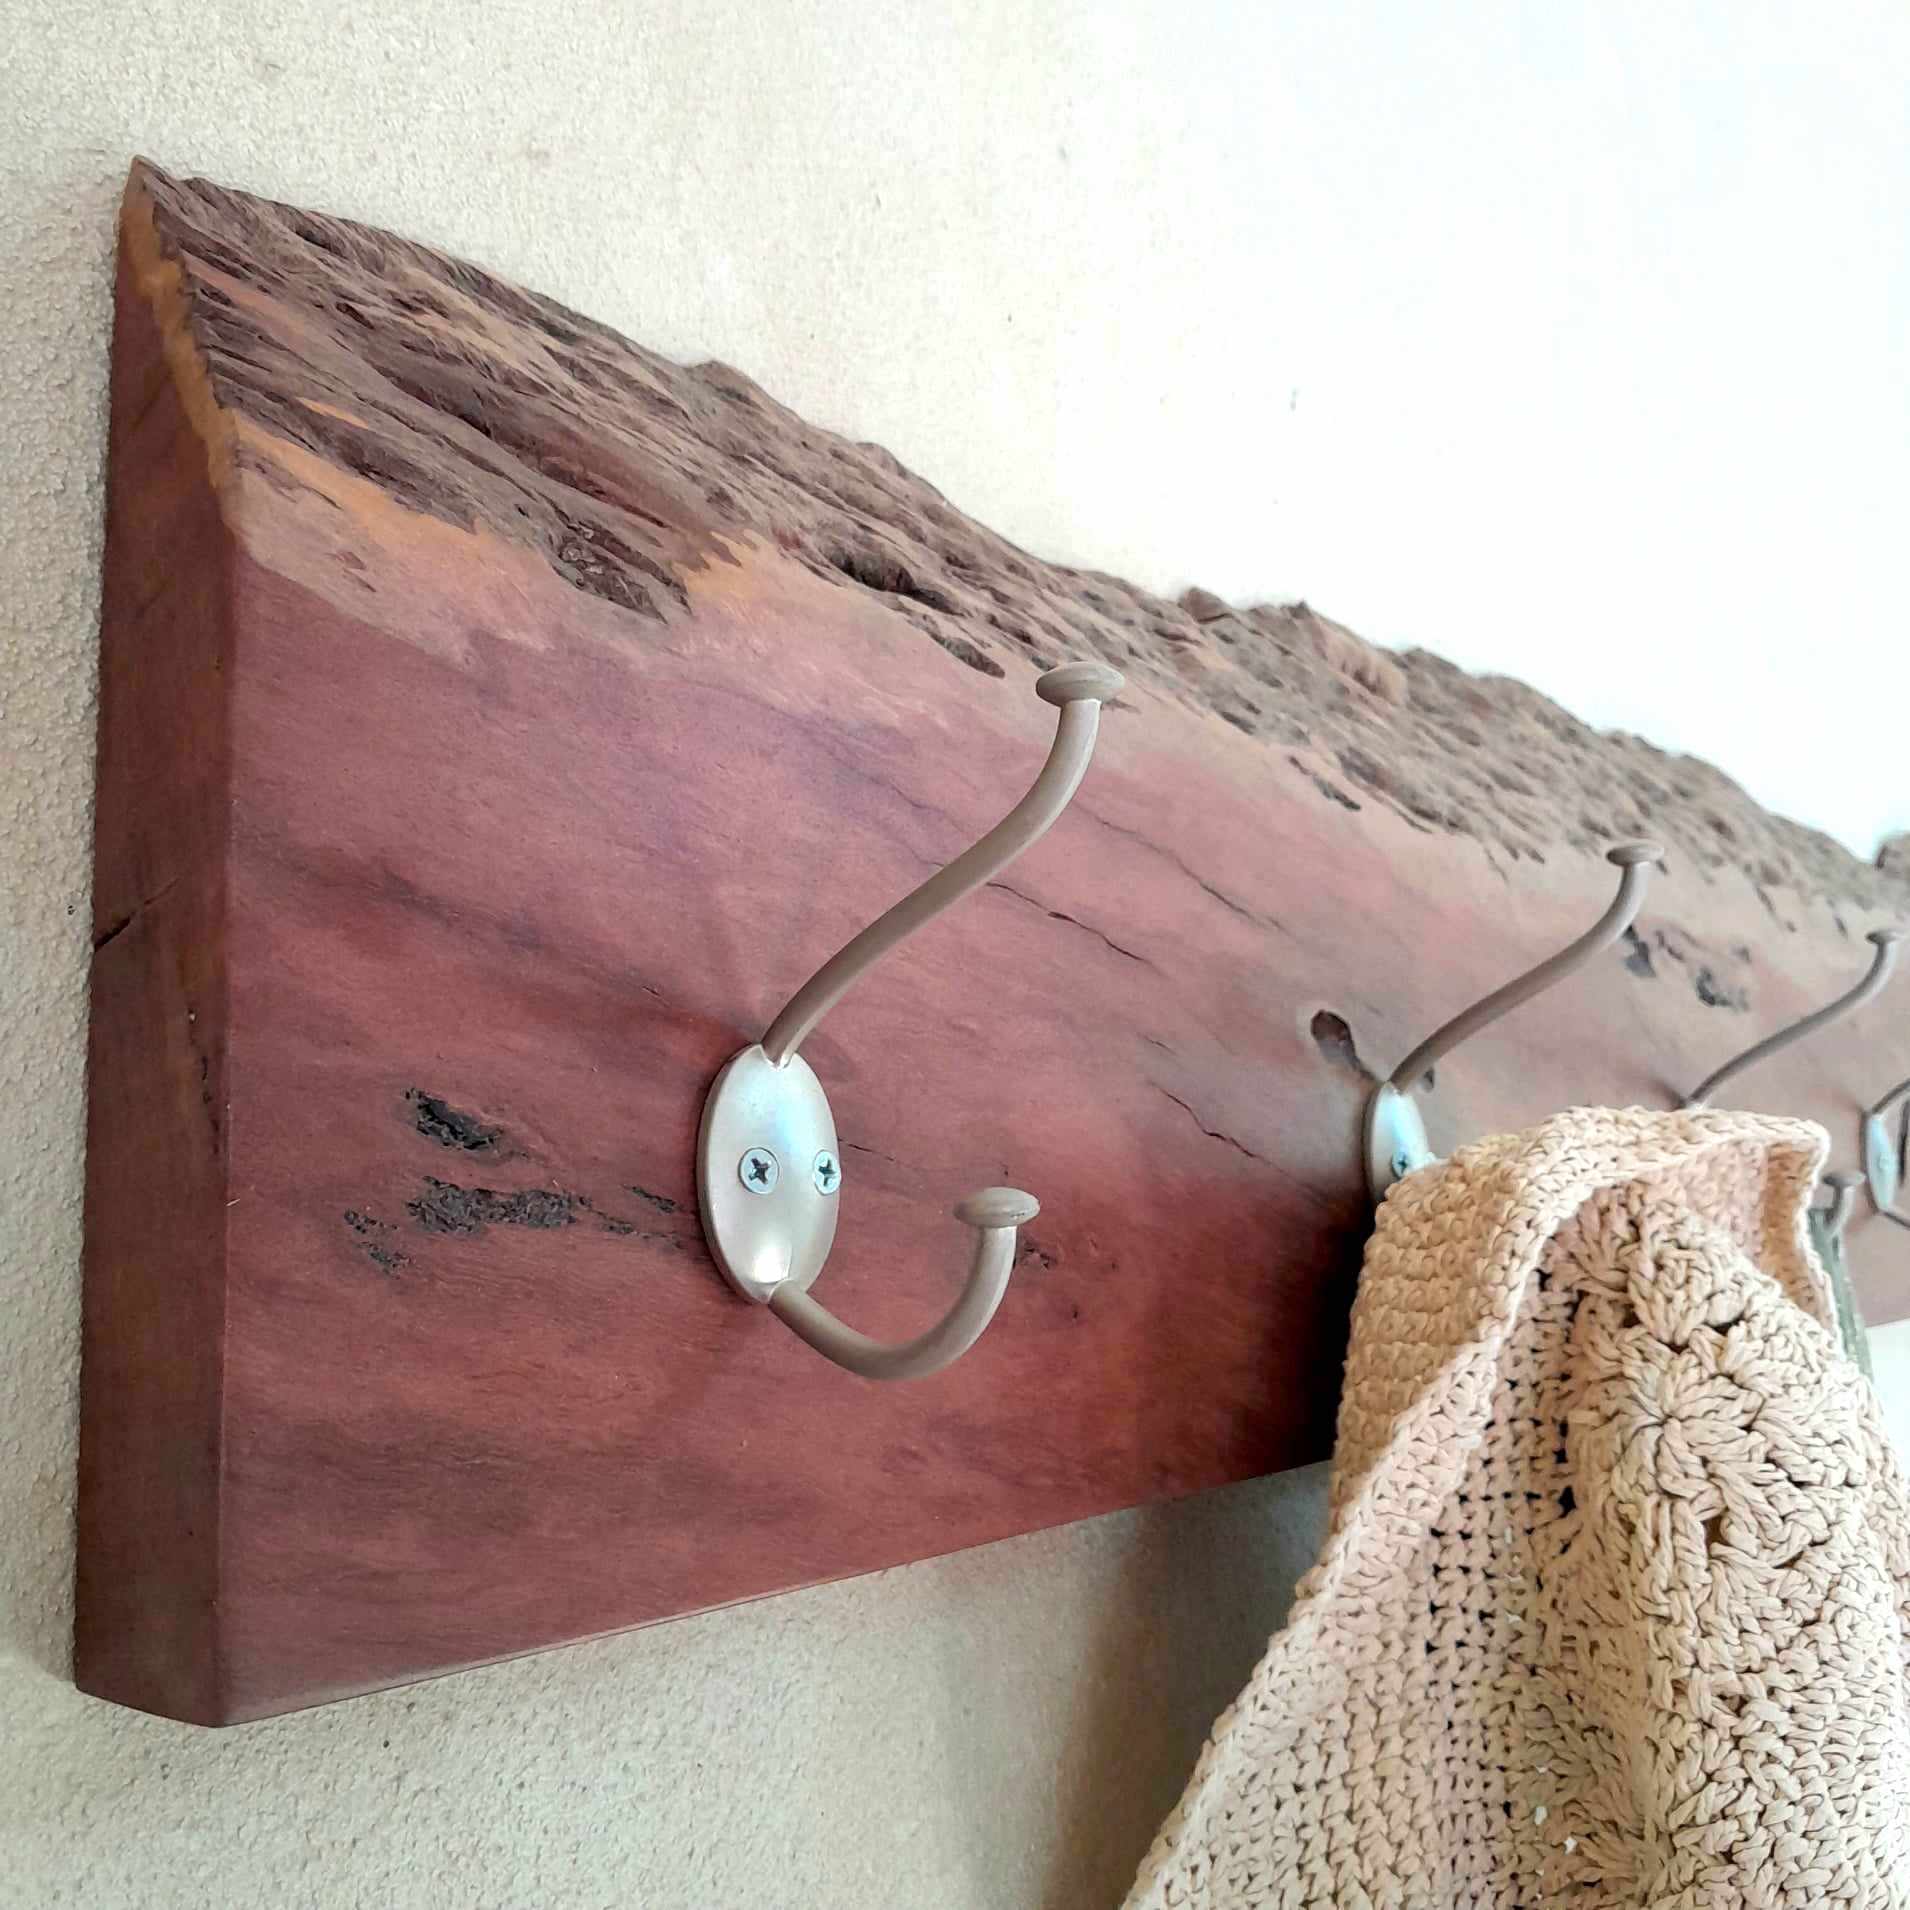 Wooden Custom Made timber Coat Rack wall mounted Perth Australia